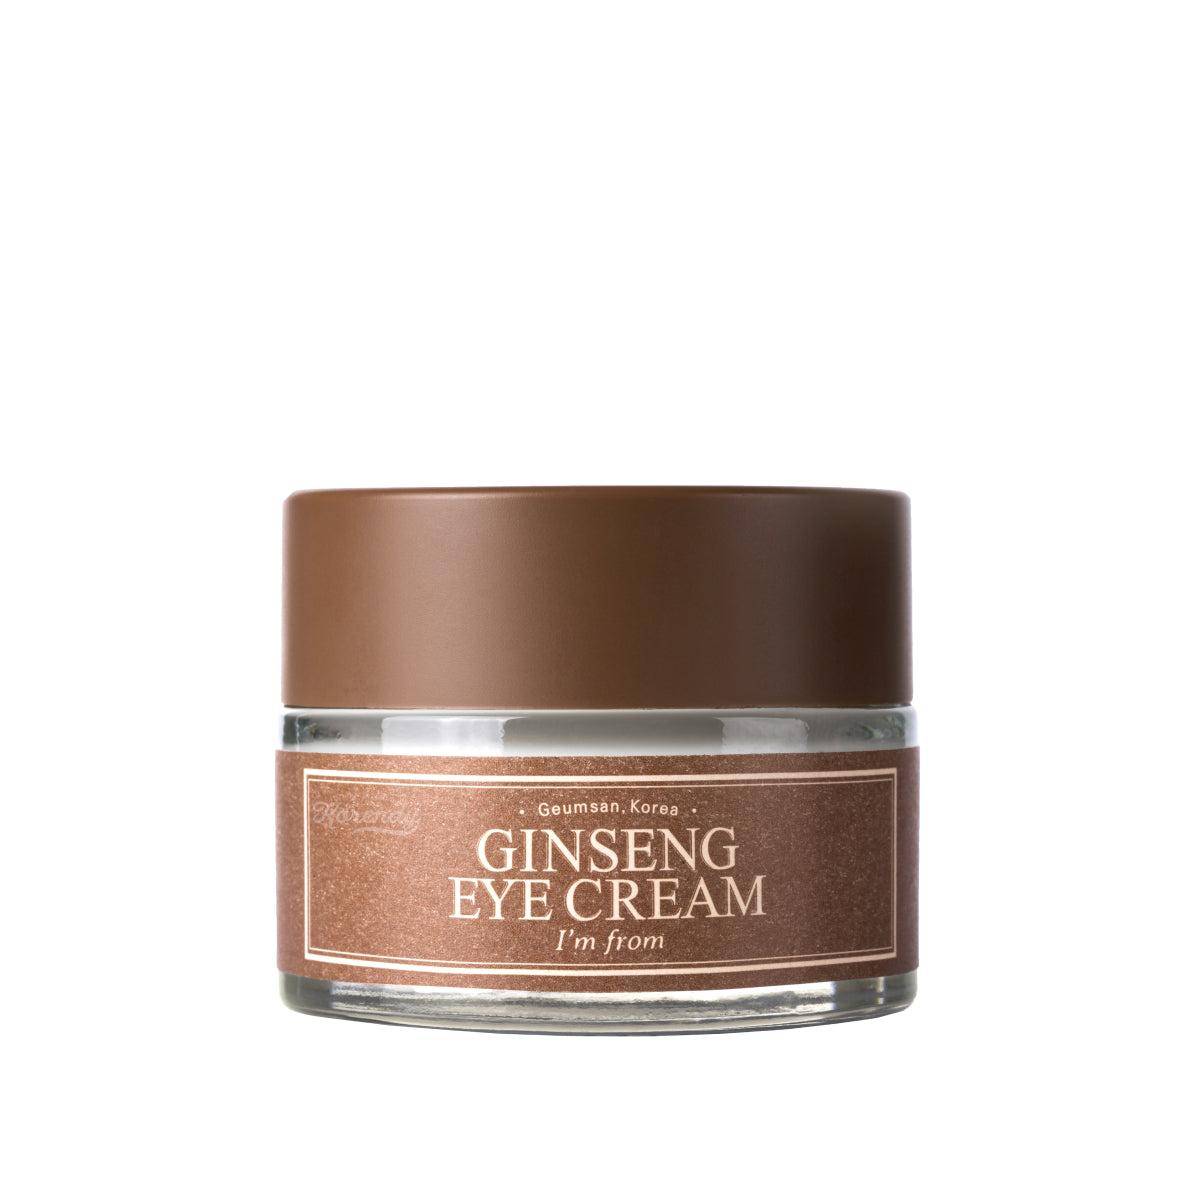 I'm From - Ginseng Eye Cream 30gr Krem (Göz) Korendy Türkiye Turkey Kore Kozmetik Kbeauty Cilt Bakım 